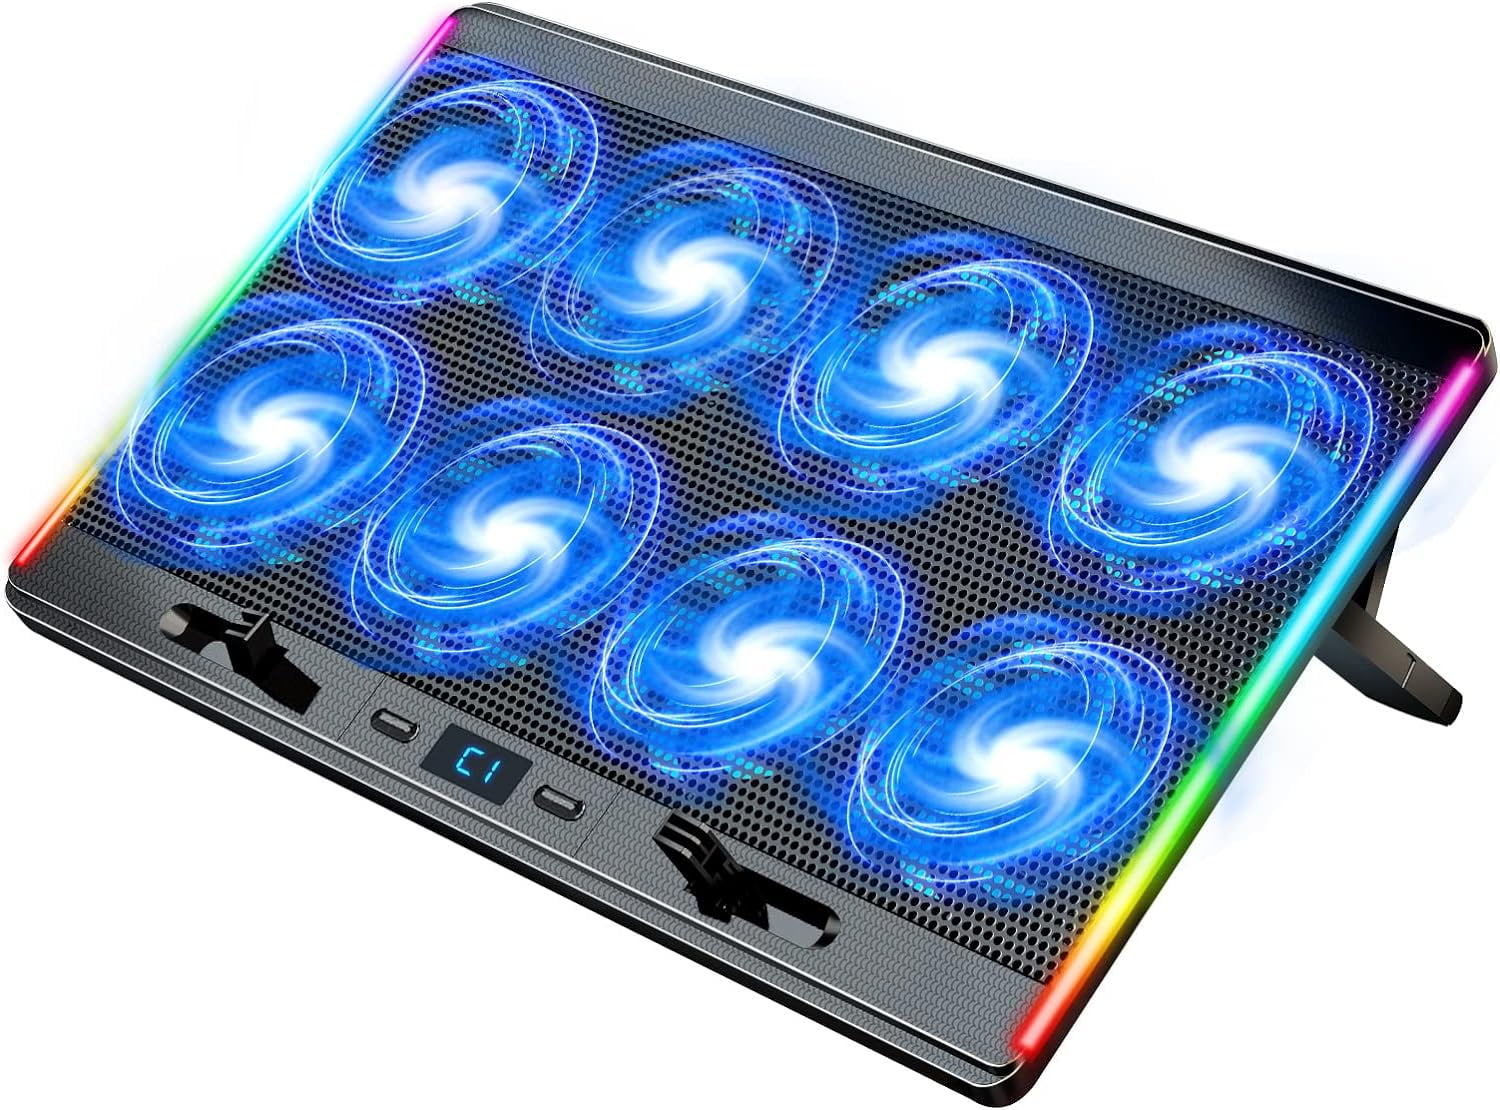 AUKUN Laptop Cooling Pad with 8 Quiet Fans 7 Angles 2 USB Port, Laptop Cooler for 12.1-17.3" Laptop